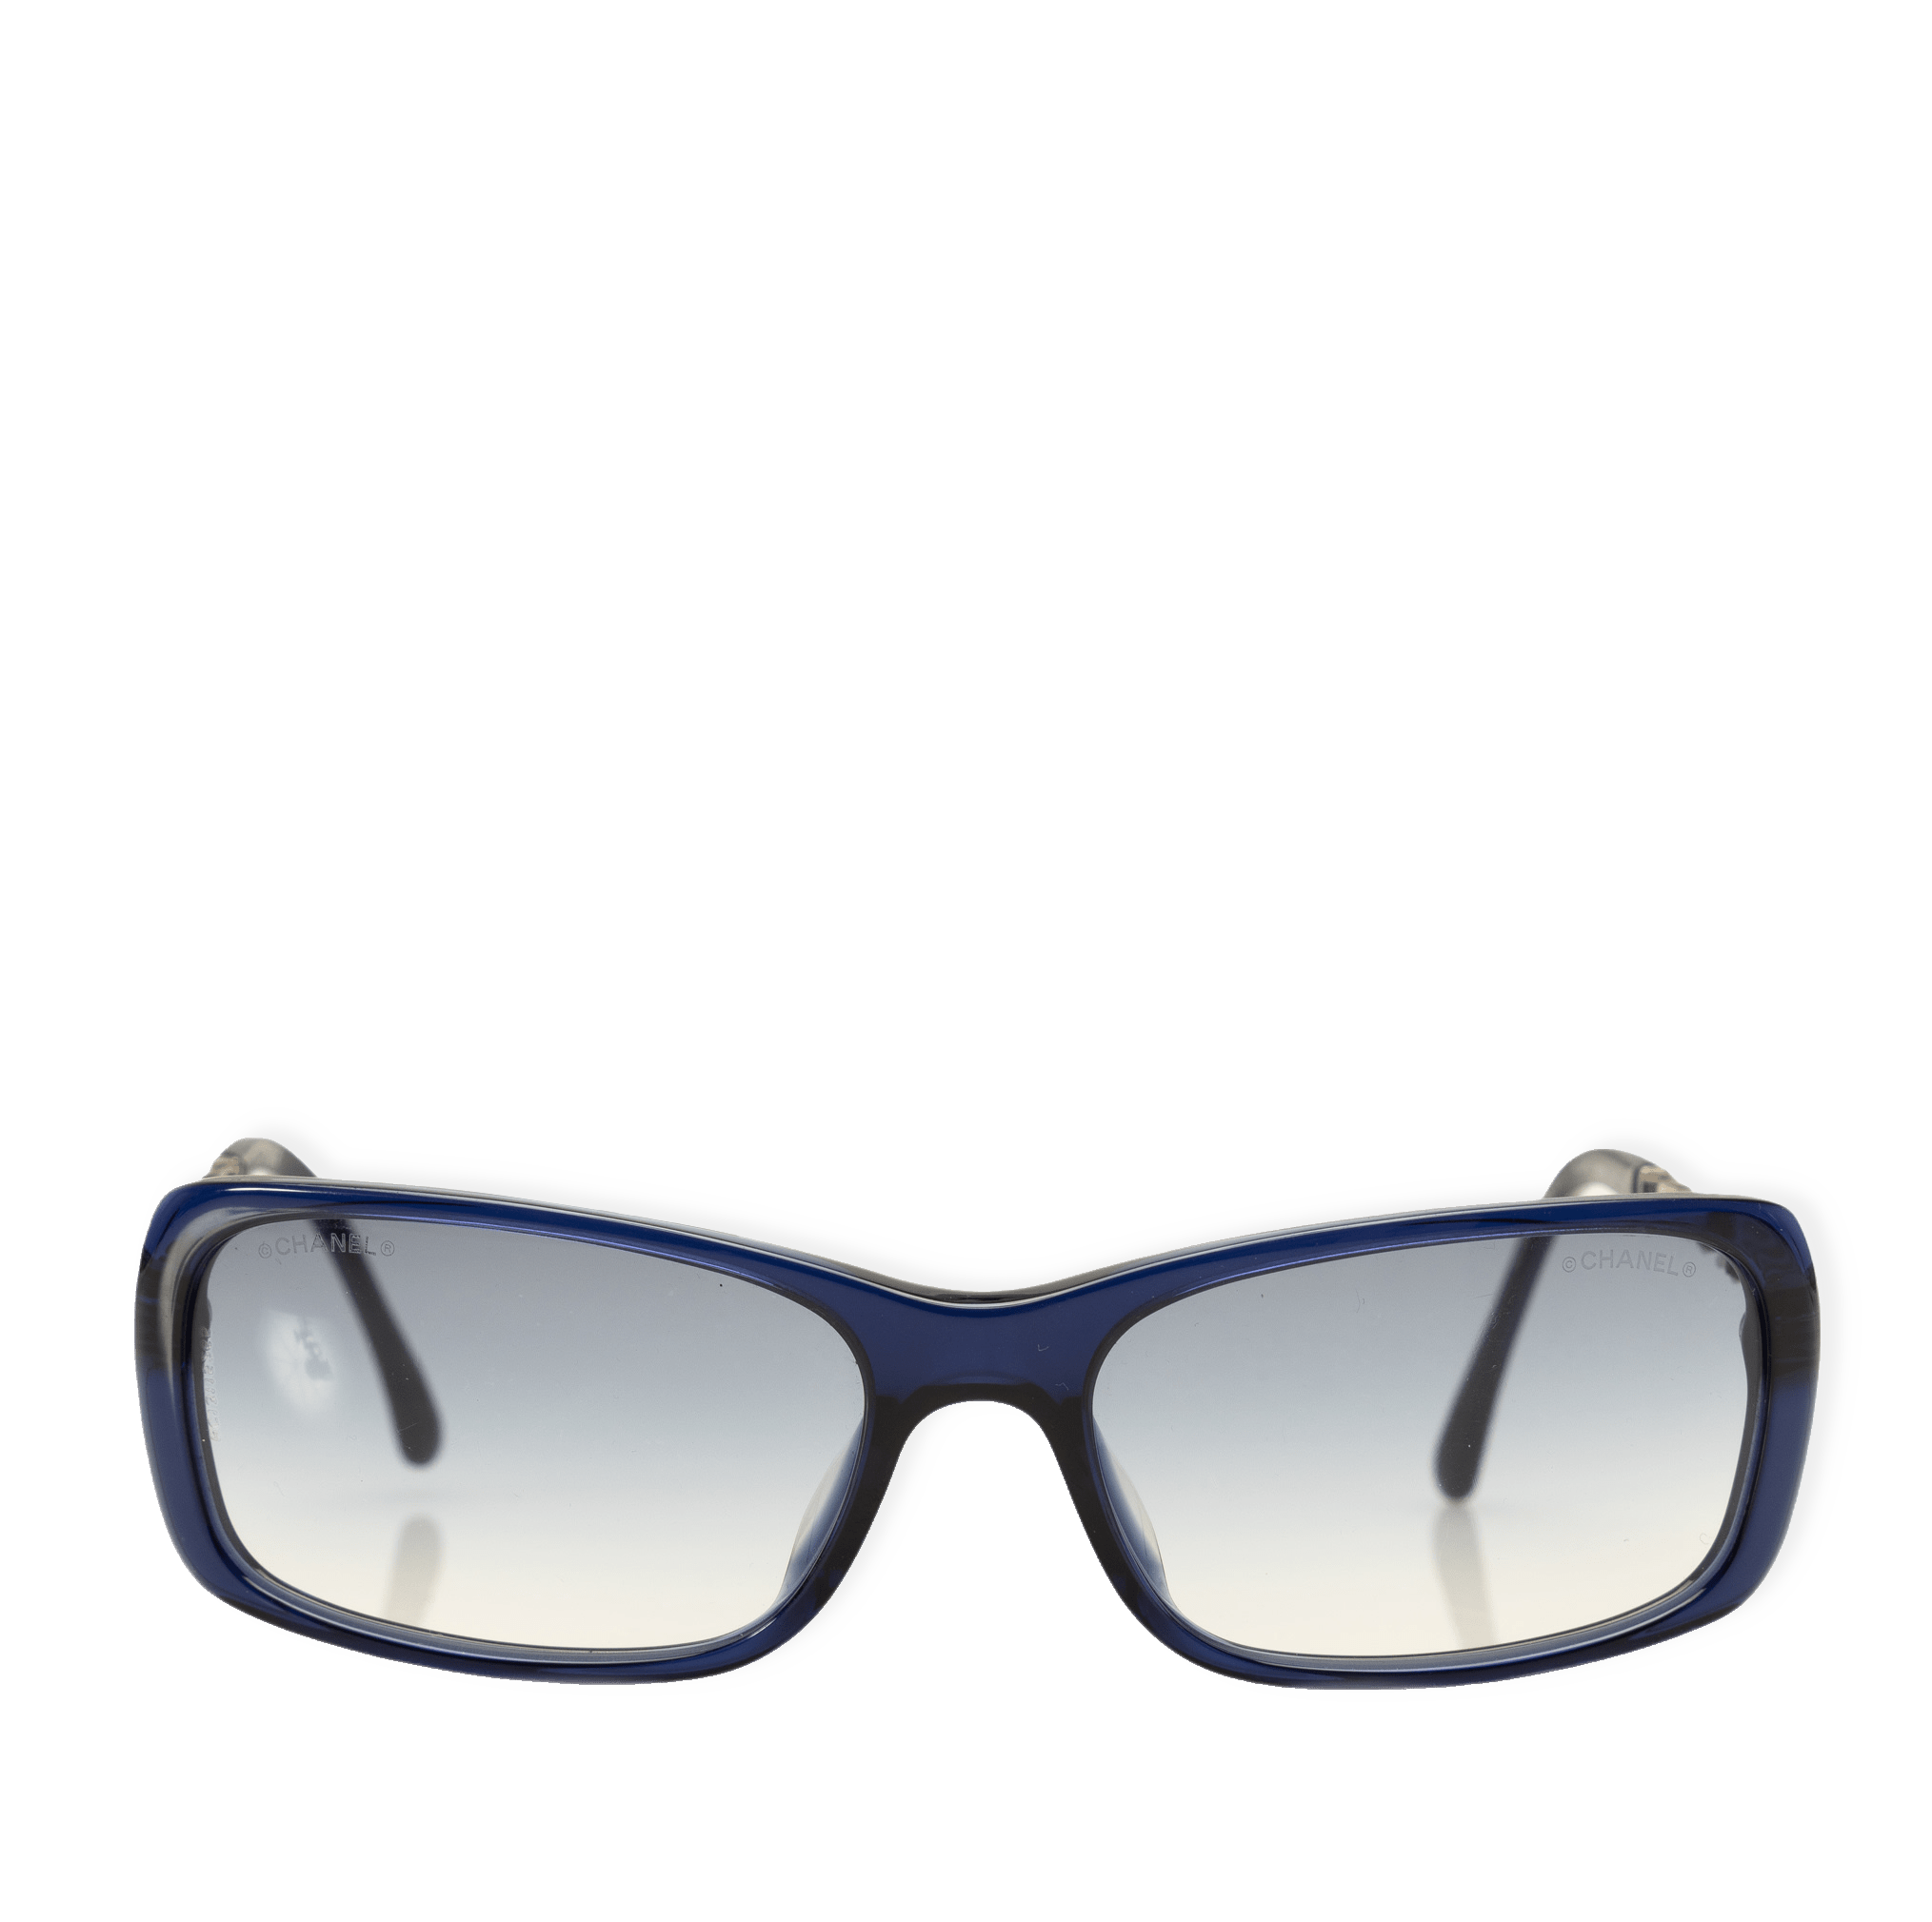 Chanel Round Tinted Sunglasses från Luxclusif